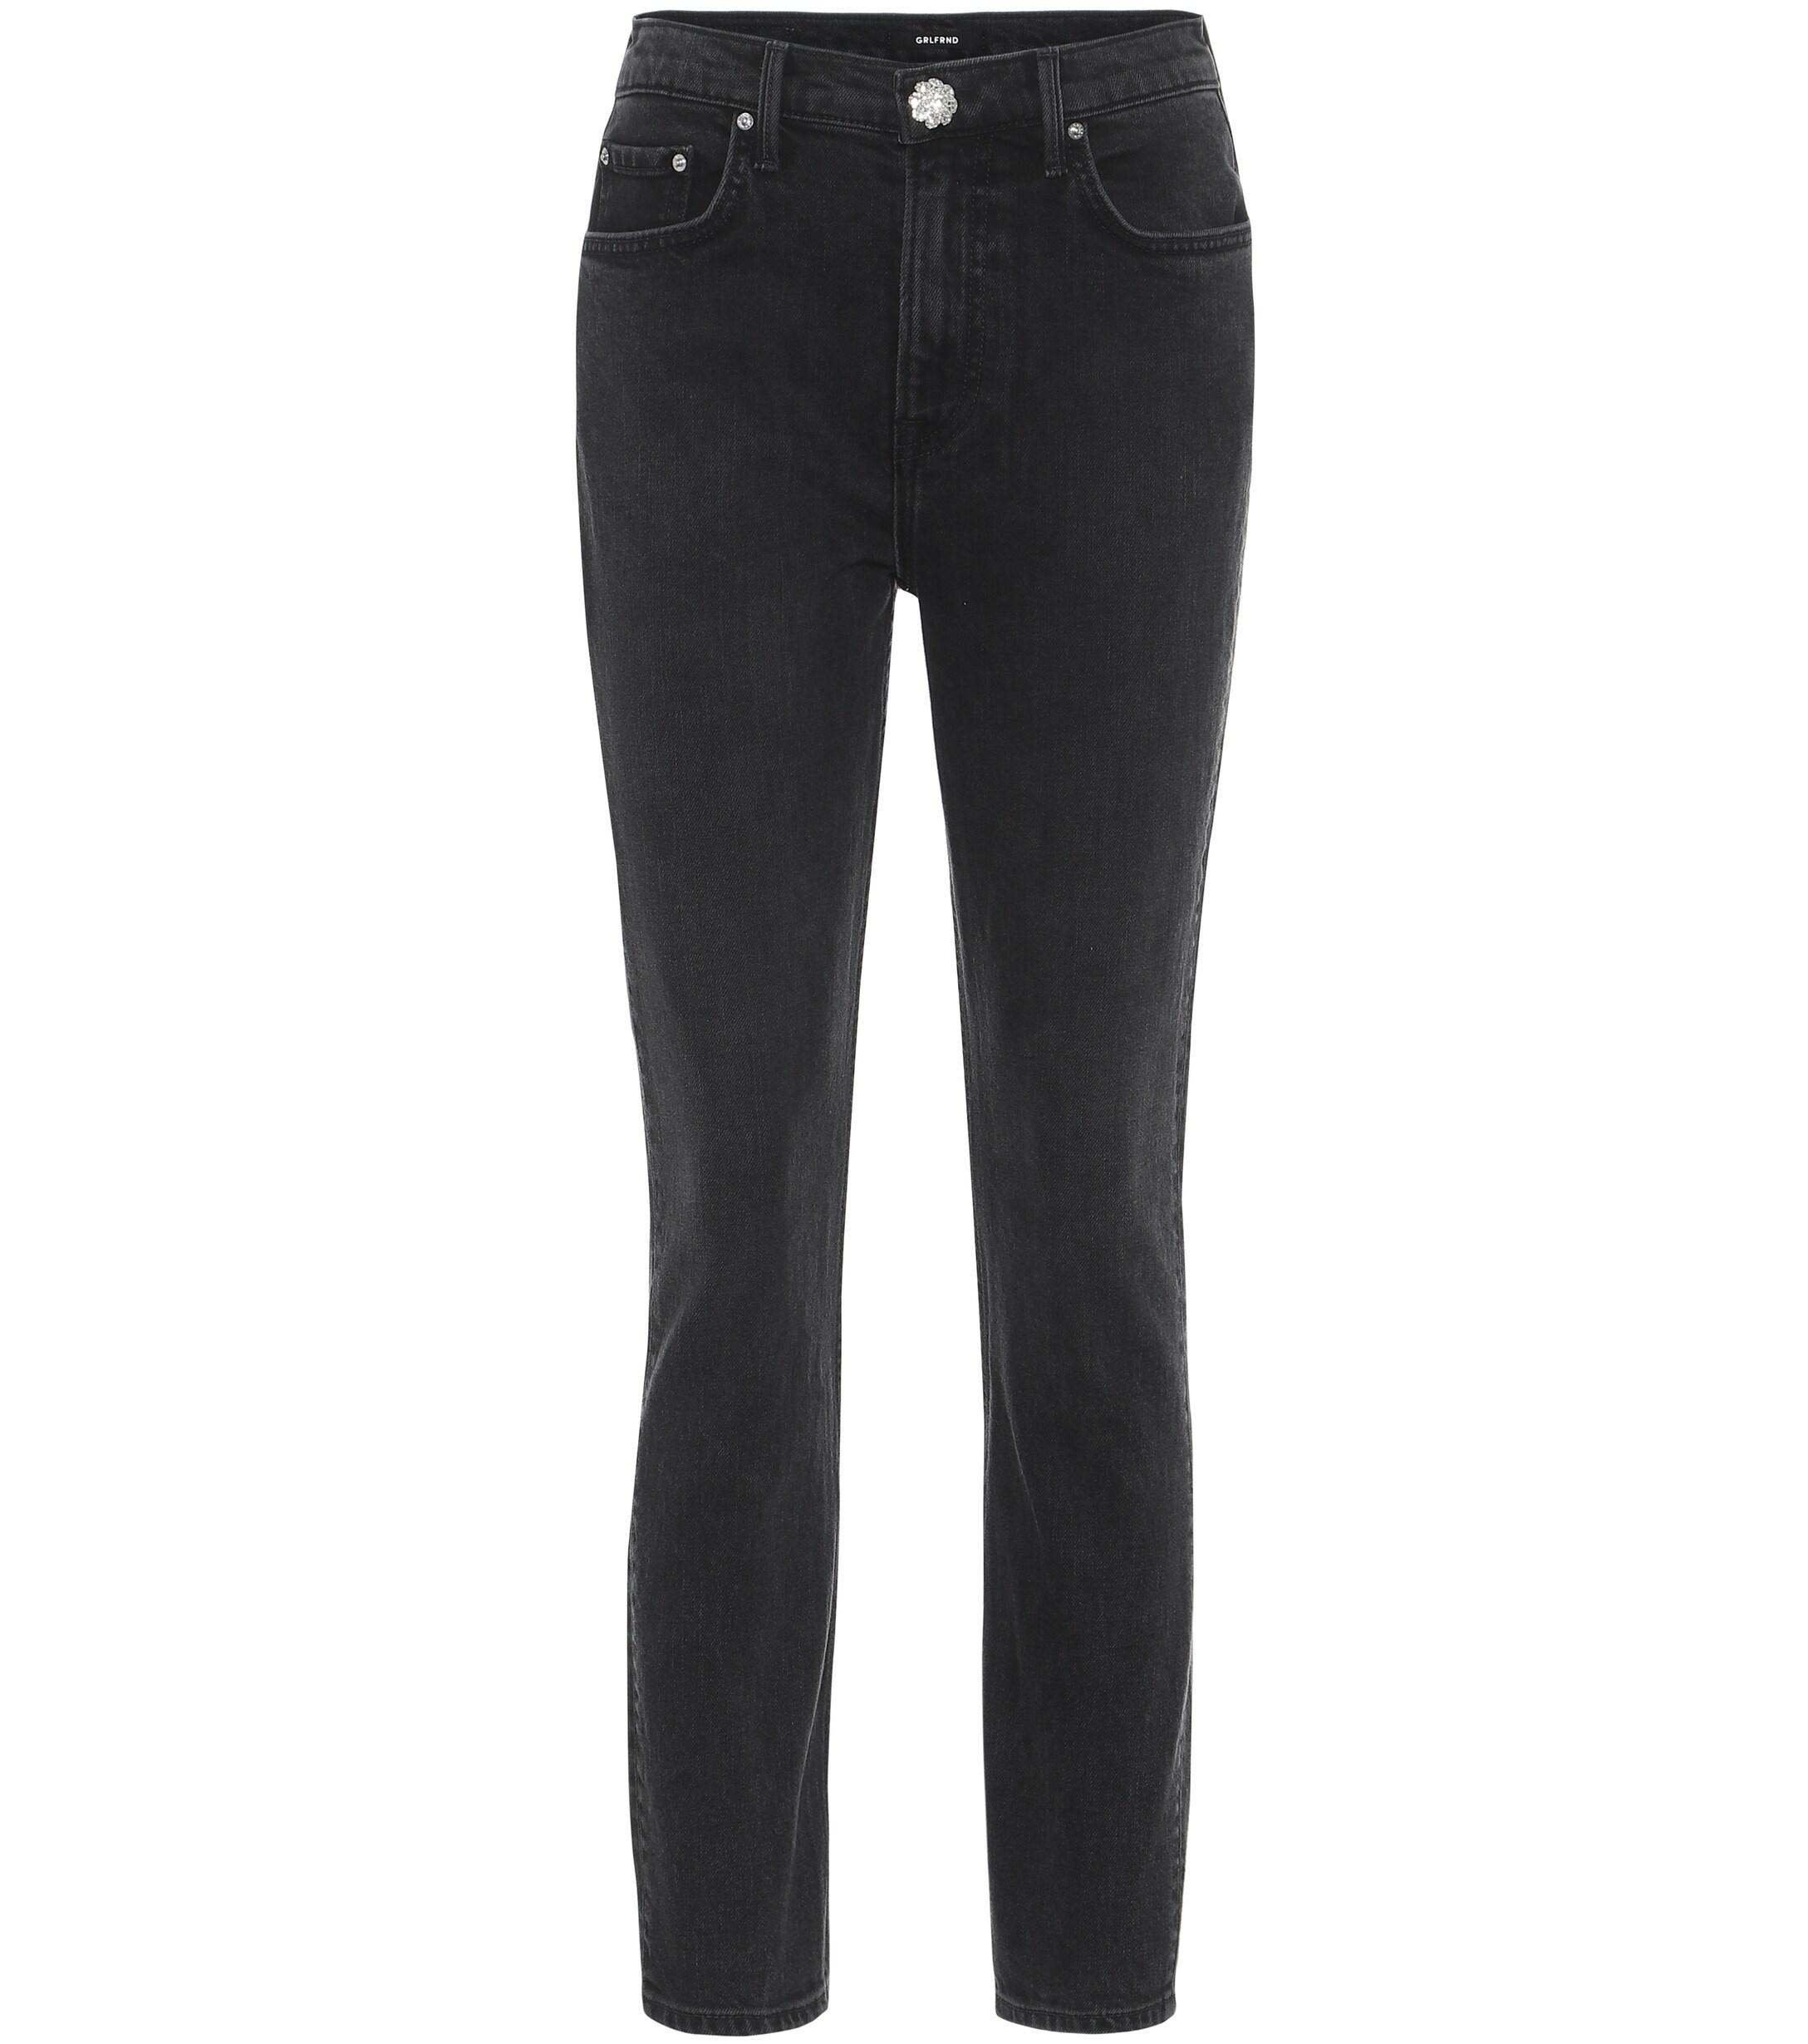 GRLFRND Denim Karolina High-rise Skinny Jeans in Black - Lyst